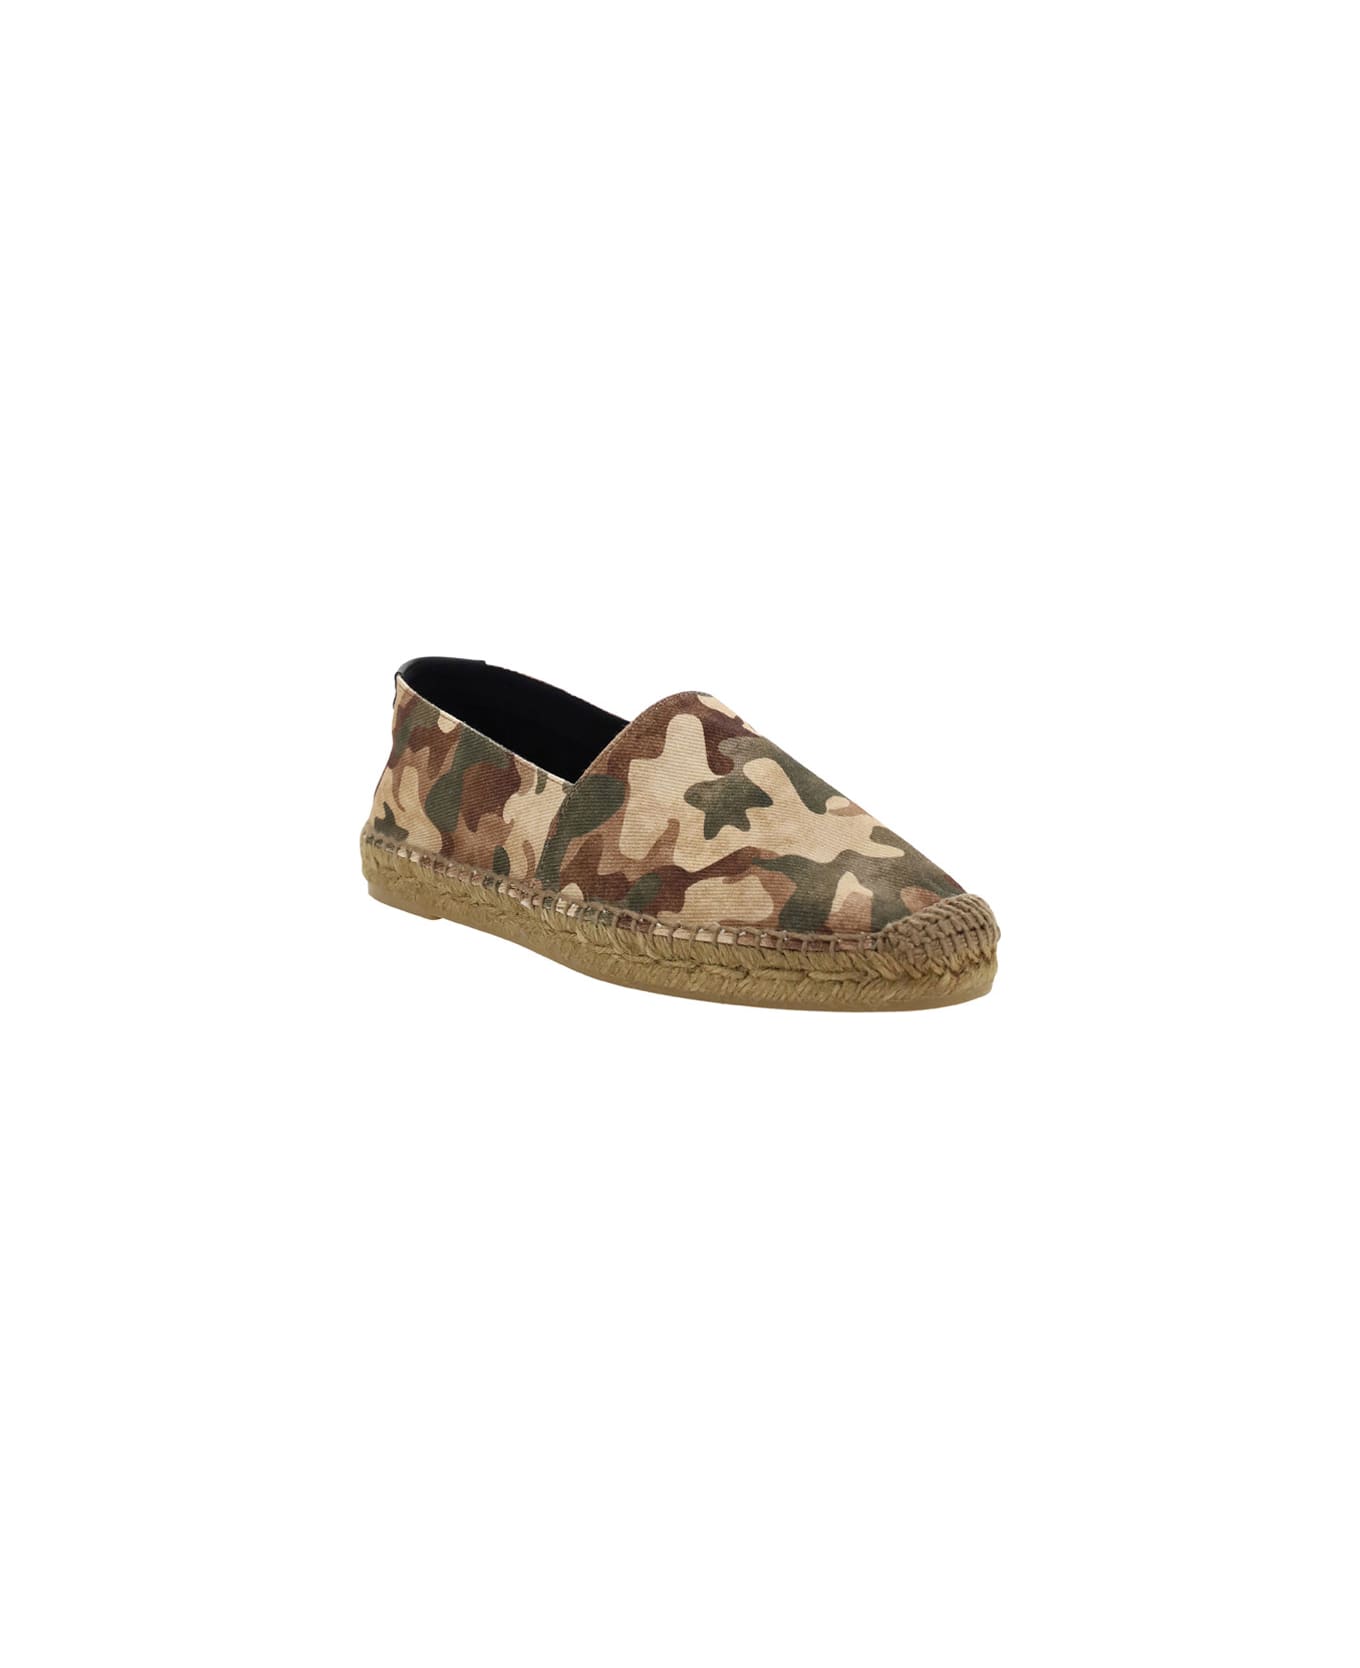 Saint Laurent Espadrilles Shoes - Military Multi/nero